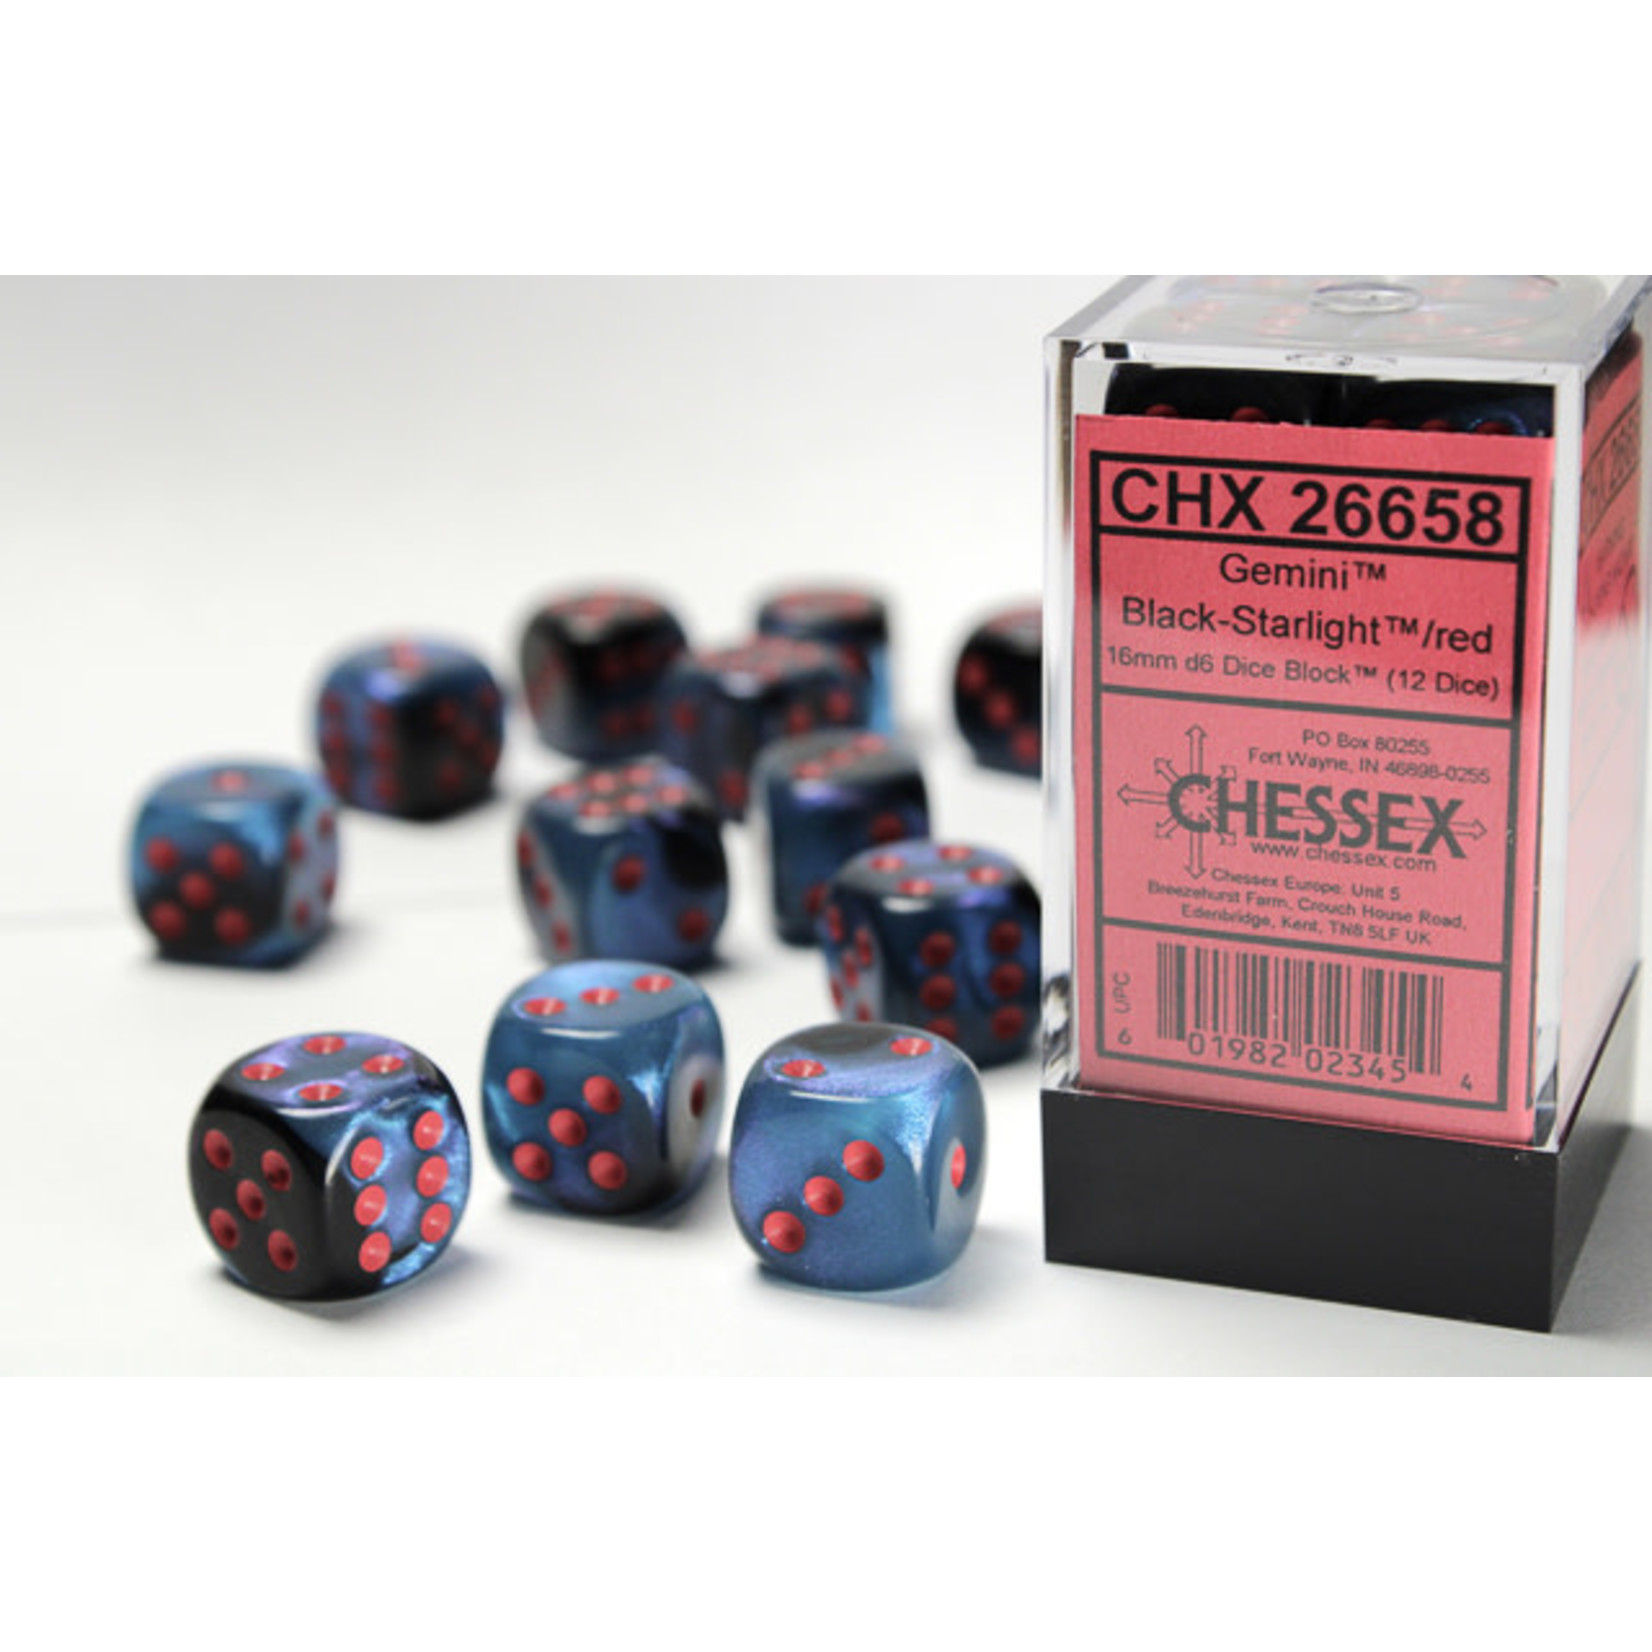 Chessex Dice 16mm 26658 12pc Gemini Black-Starlight/Red